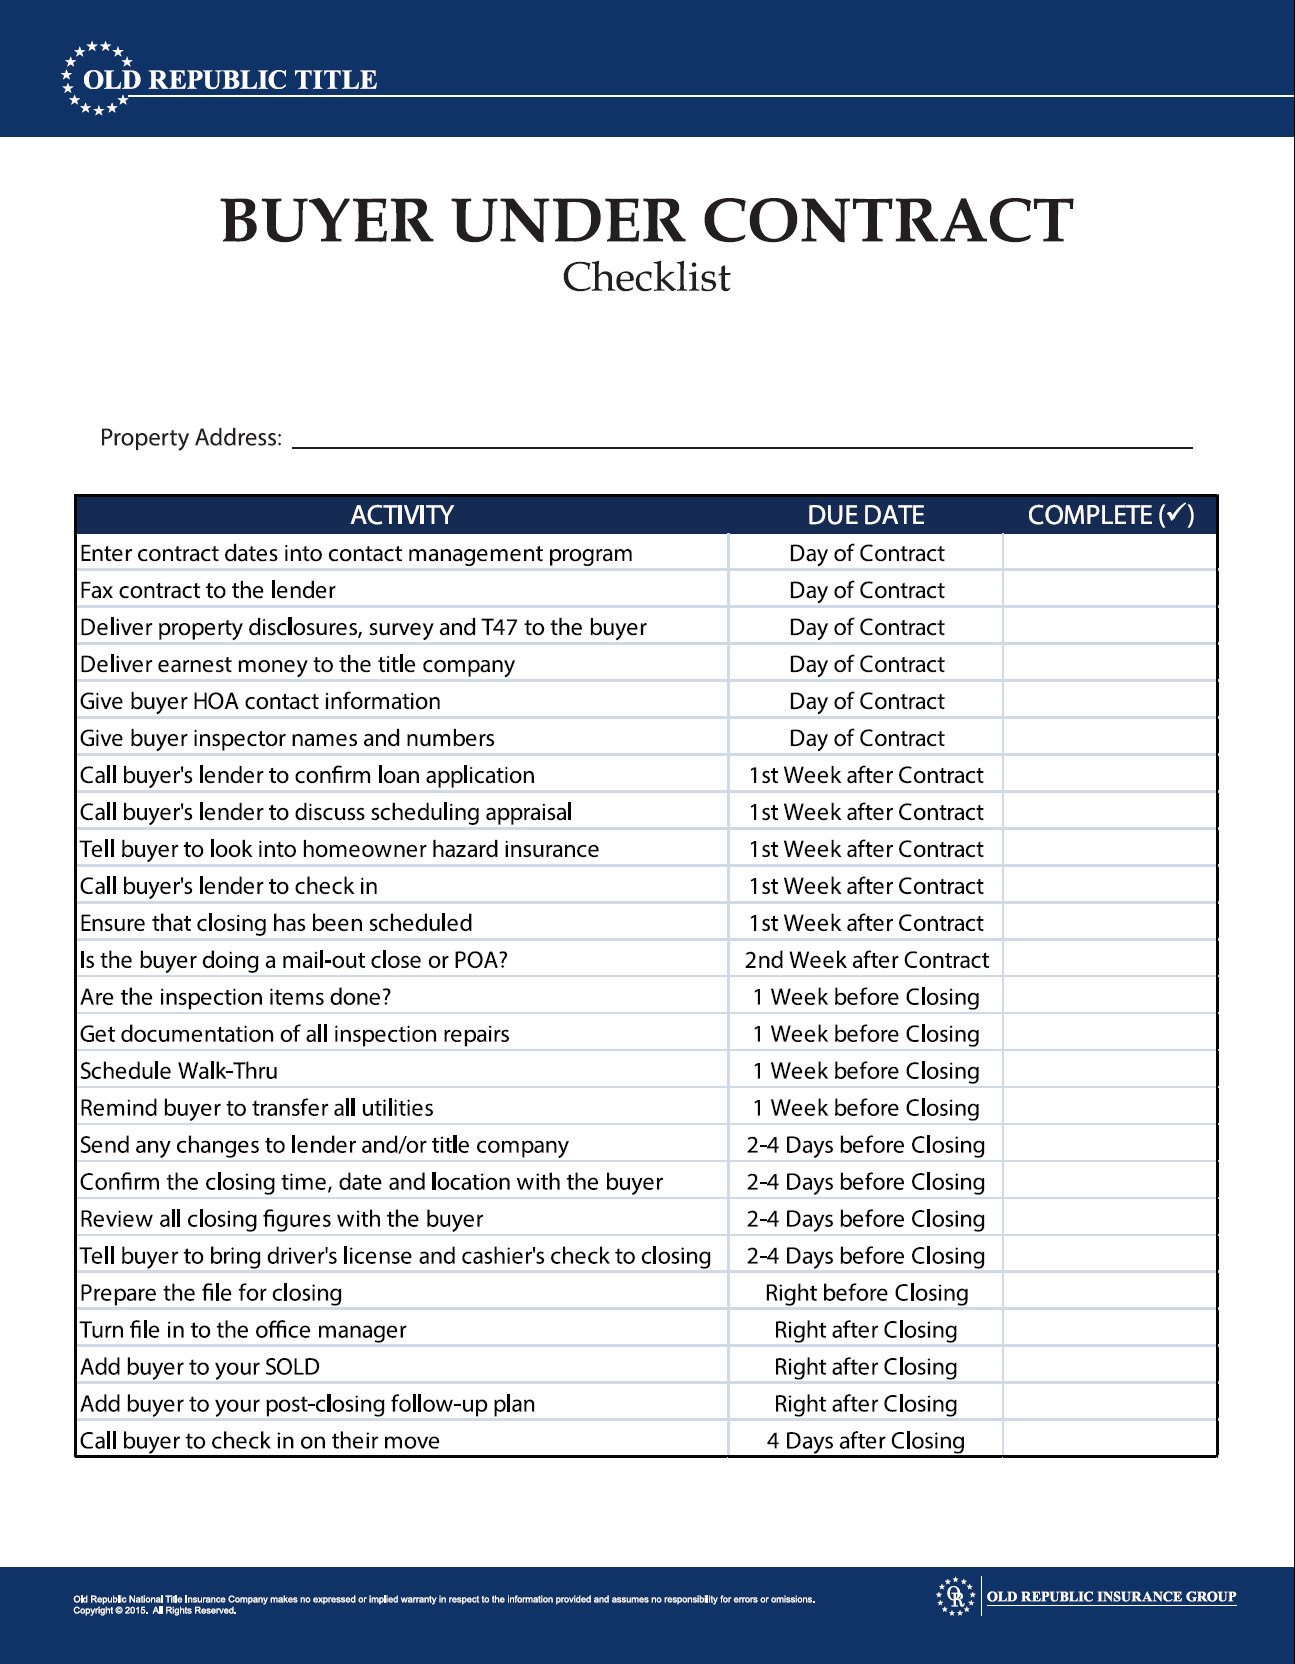 Buyer Under Contract Checklist